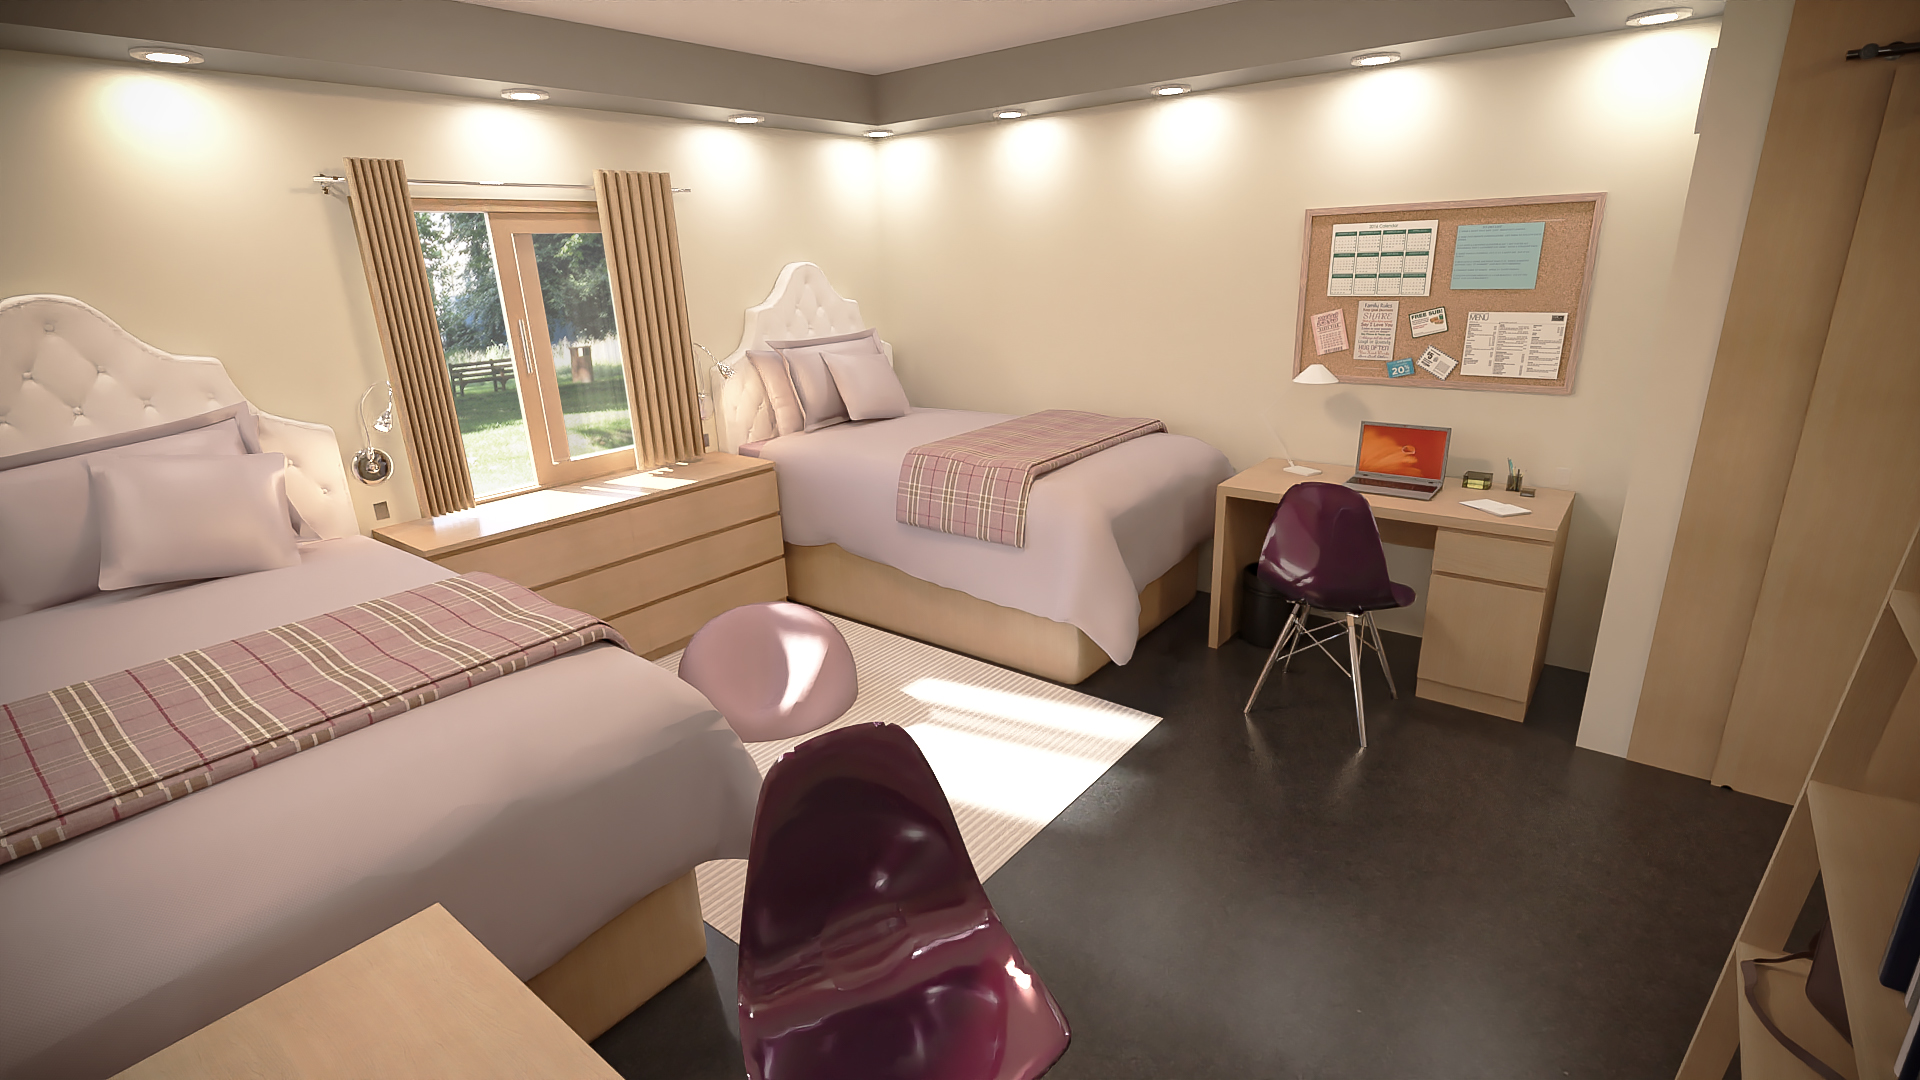 Girls Dorm Room by: Tesla3dCorp, 3D Models by Daz 3D